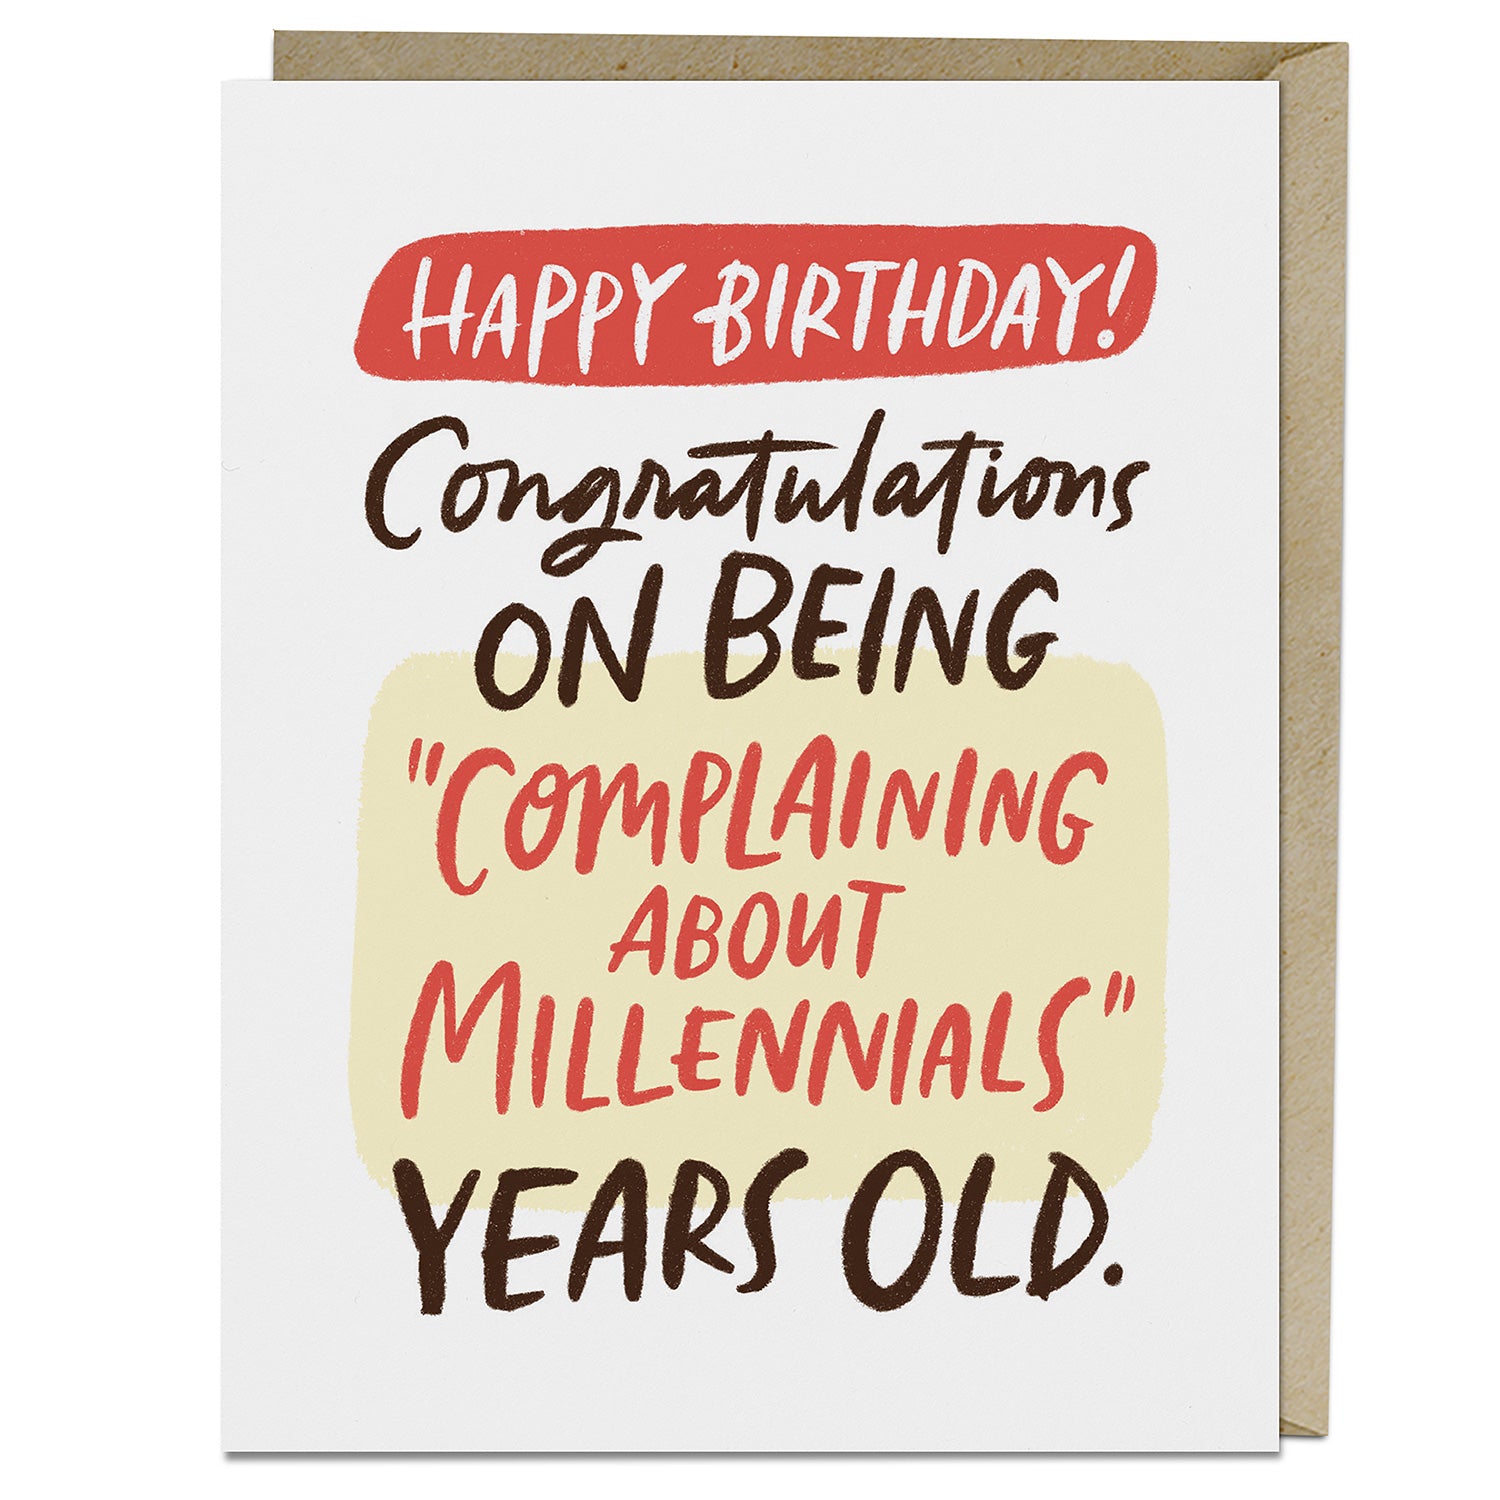 Complaining About Millennials Birthday Card